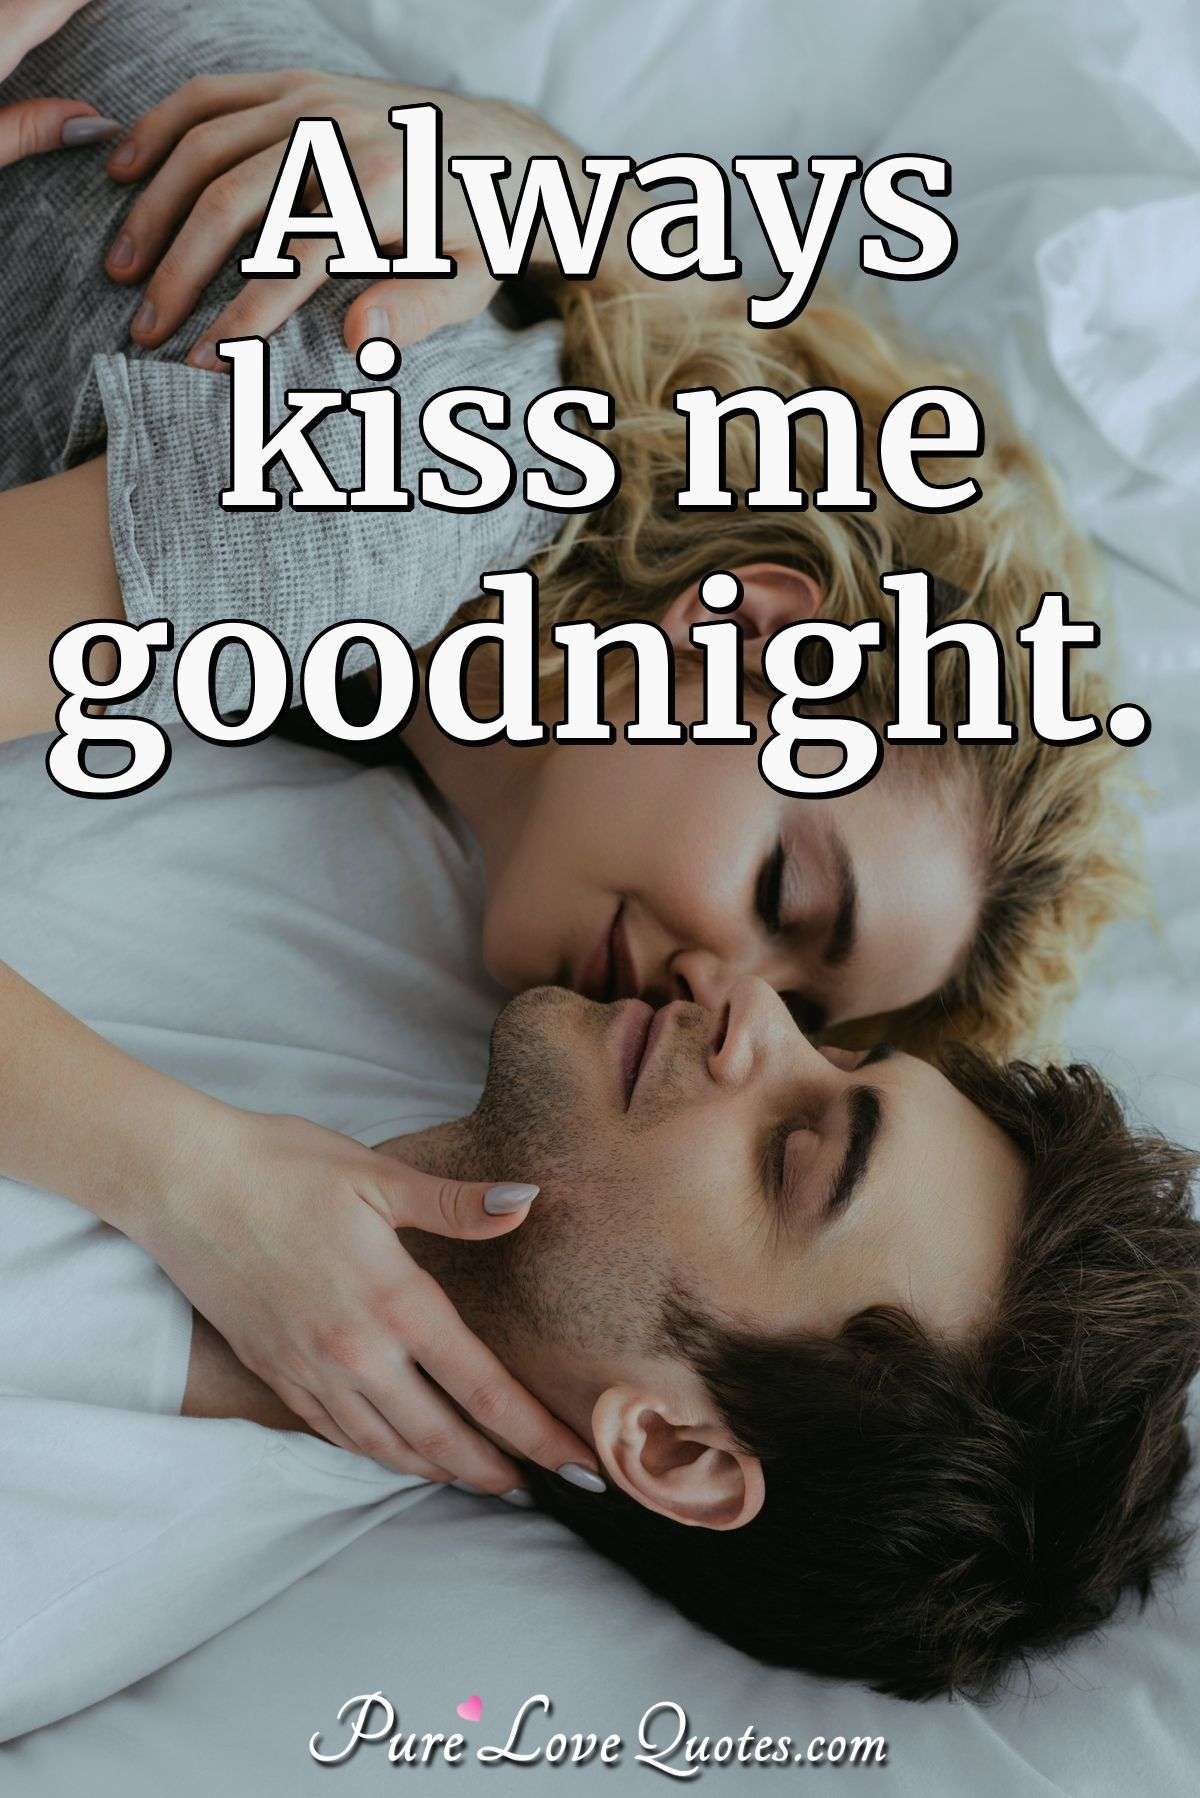 Always kiss me goodnight. - Anonymous